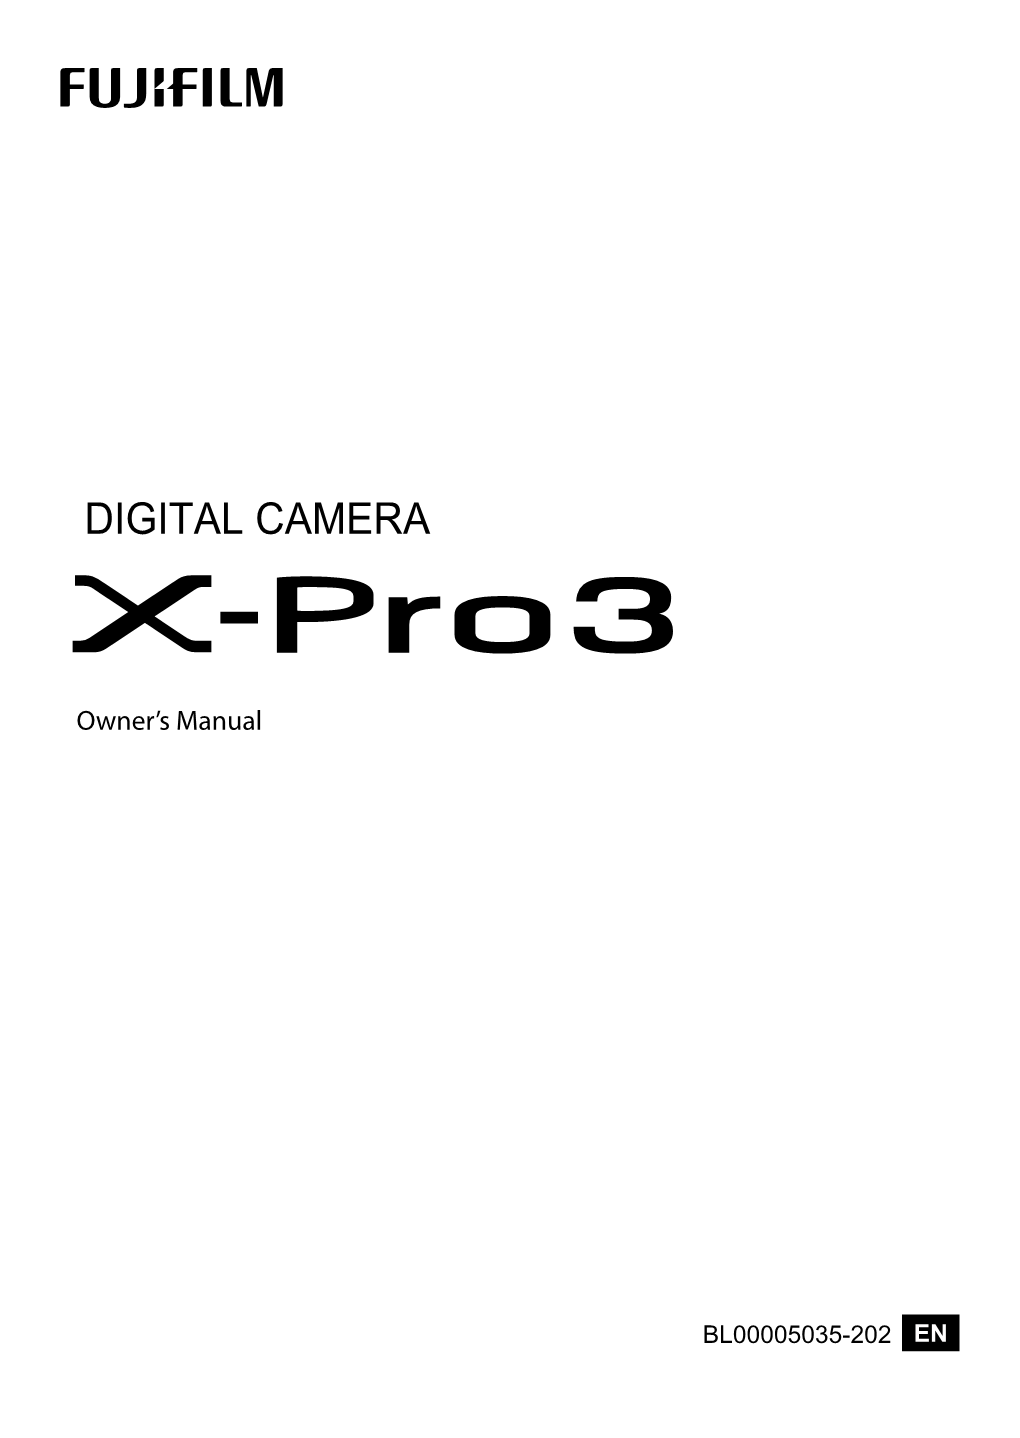 X-Pro3 Digital Camera